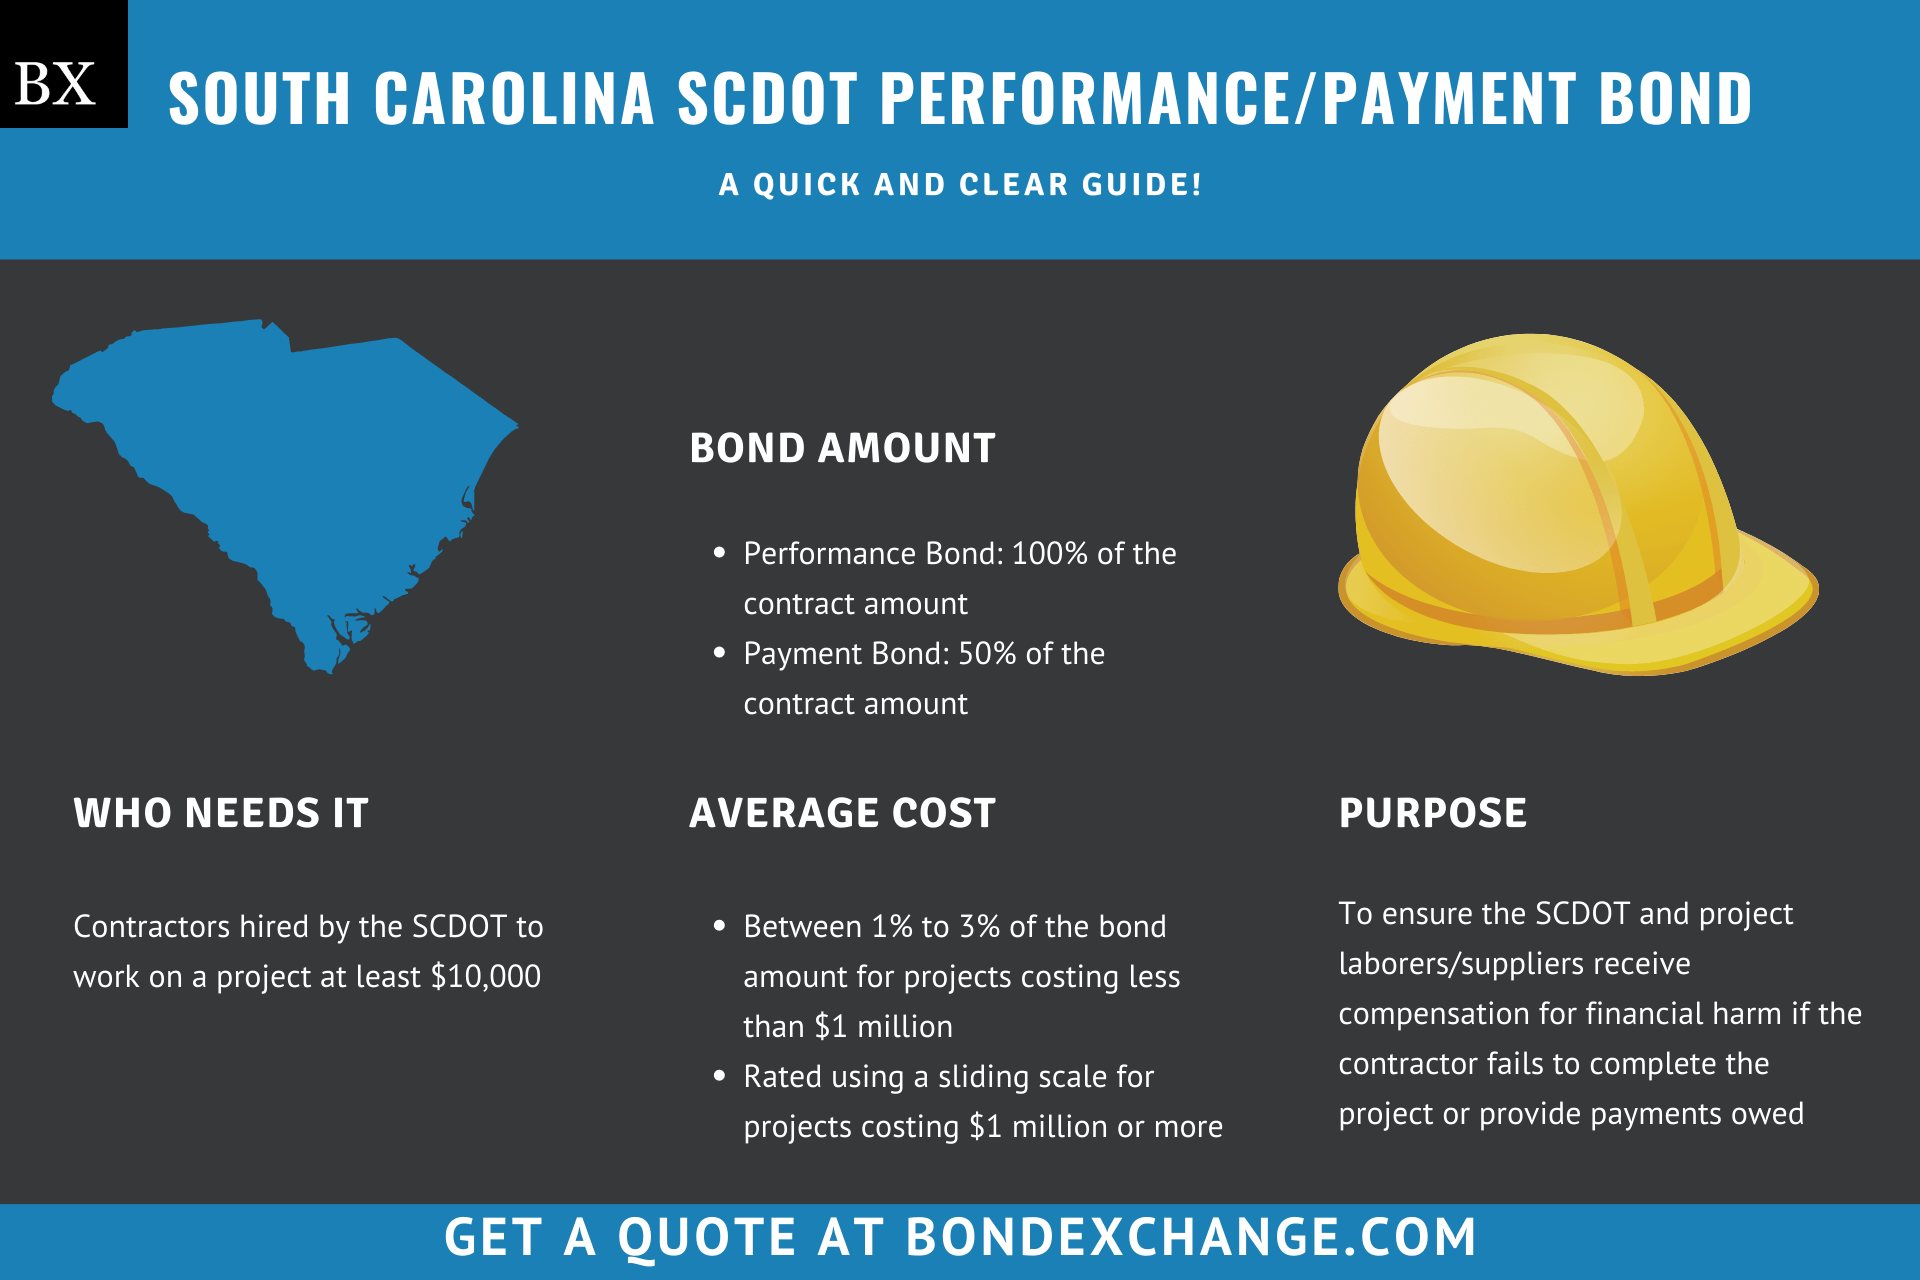 South Carolina SCDOT Performance/Payment Bond